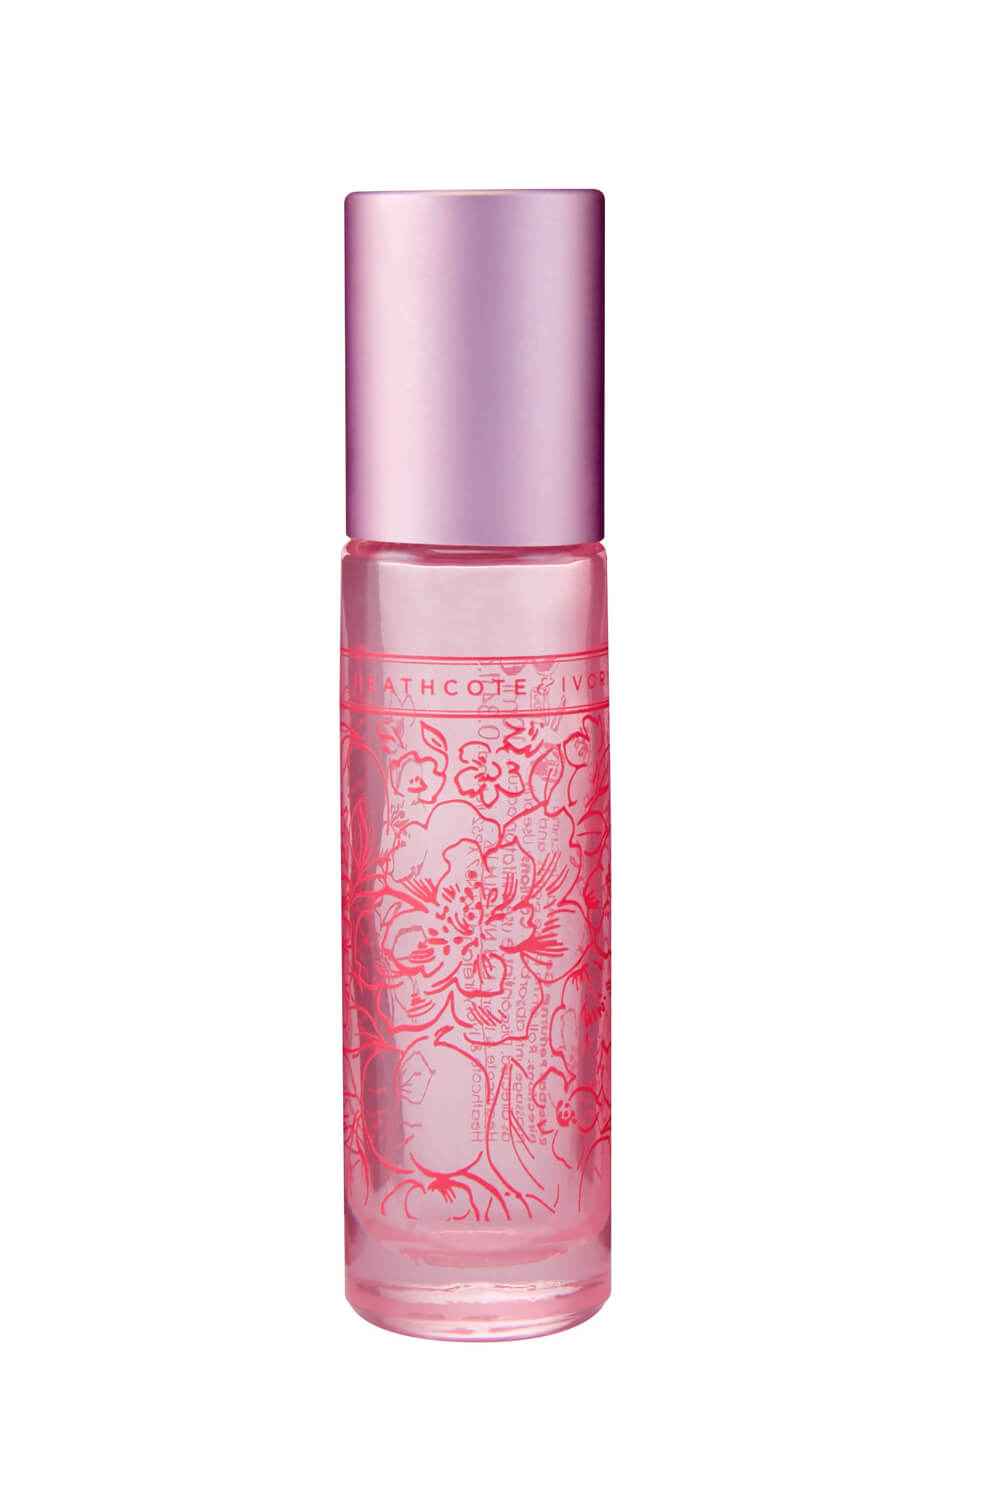  Heathcote & Ivory - Pinks and Pear Blossom Perfume Gel , Image 2 of 2